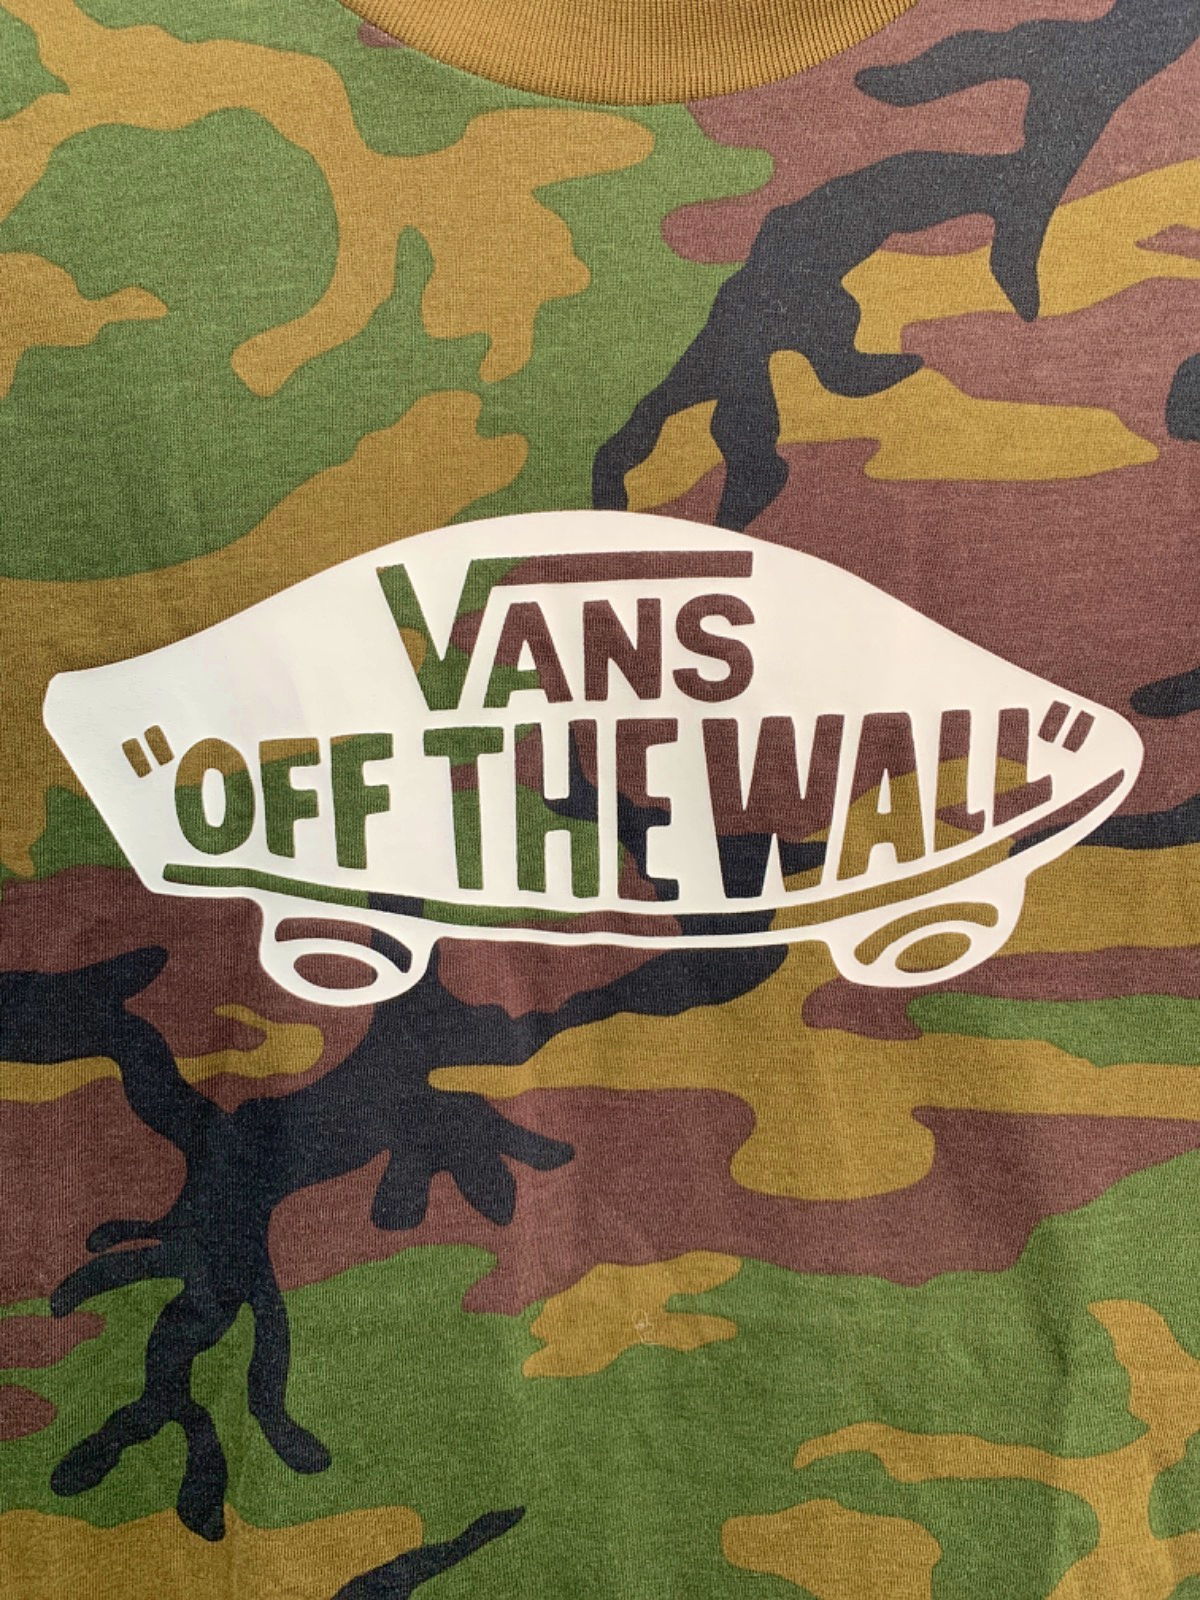 Vans Camouflage 'Off The Wall' Boys T-Shirt Medium